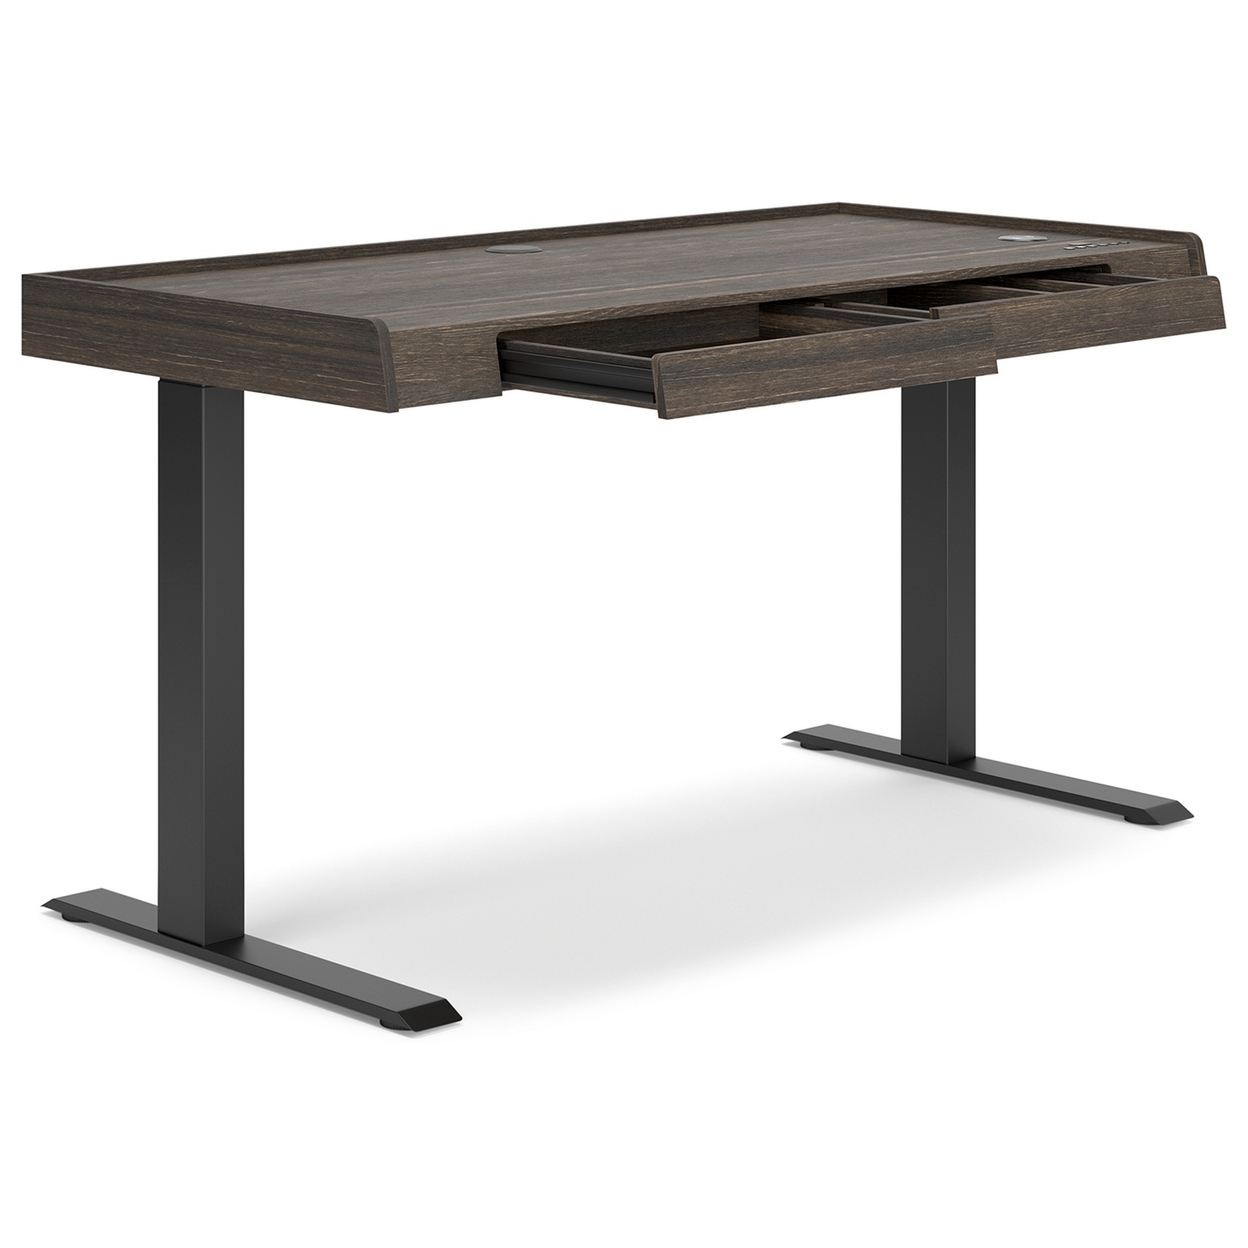 55 Inch Desk, Power Adjustable Height, USB Ports, Wood Grain, Dark Brown - Saltoro Sherpi